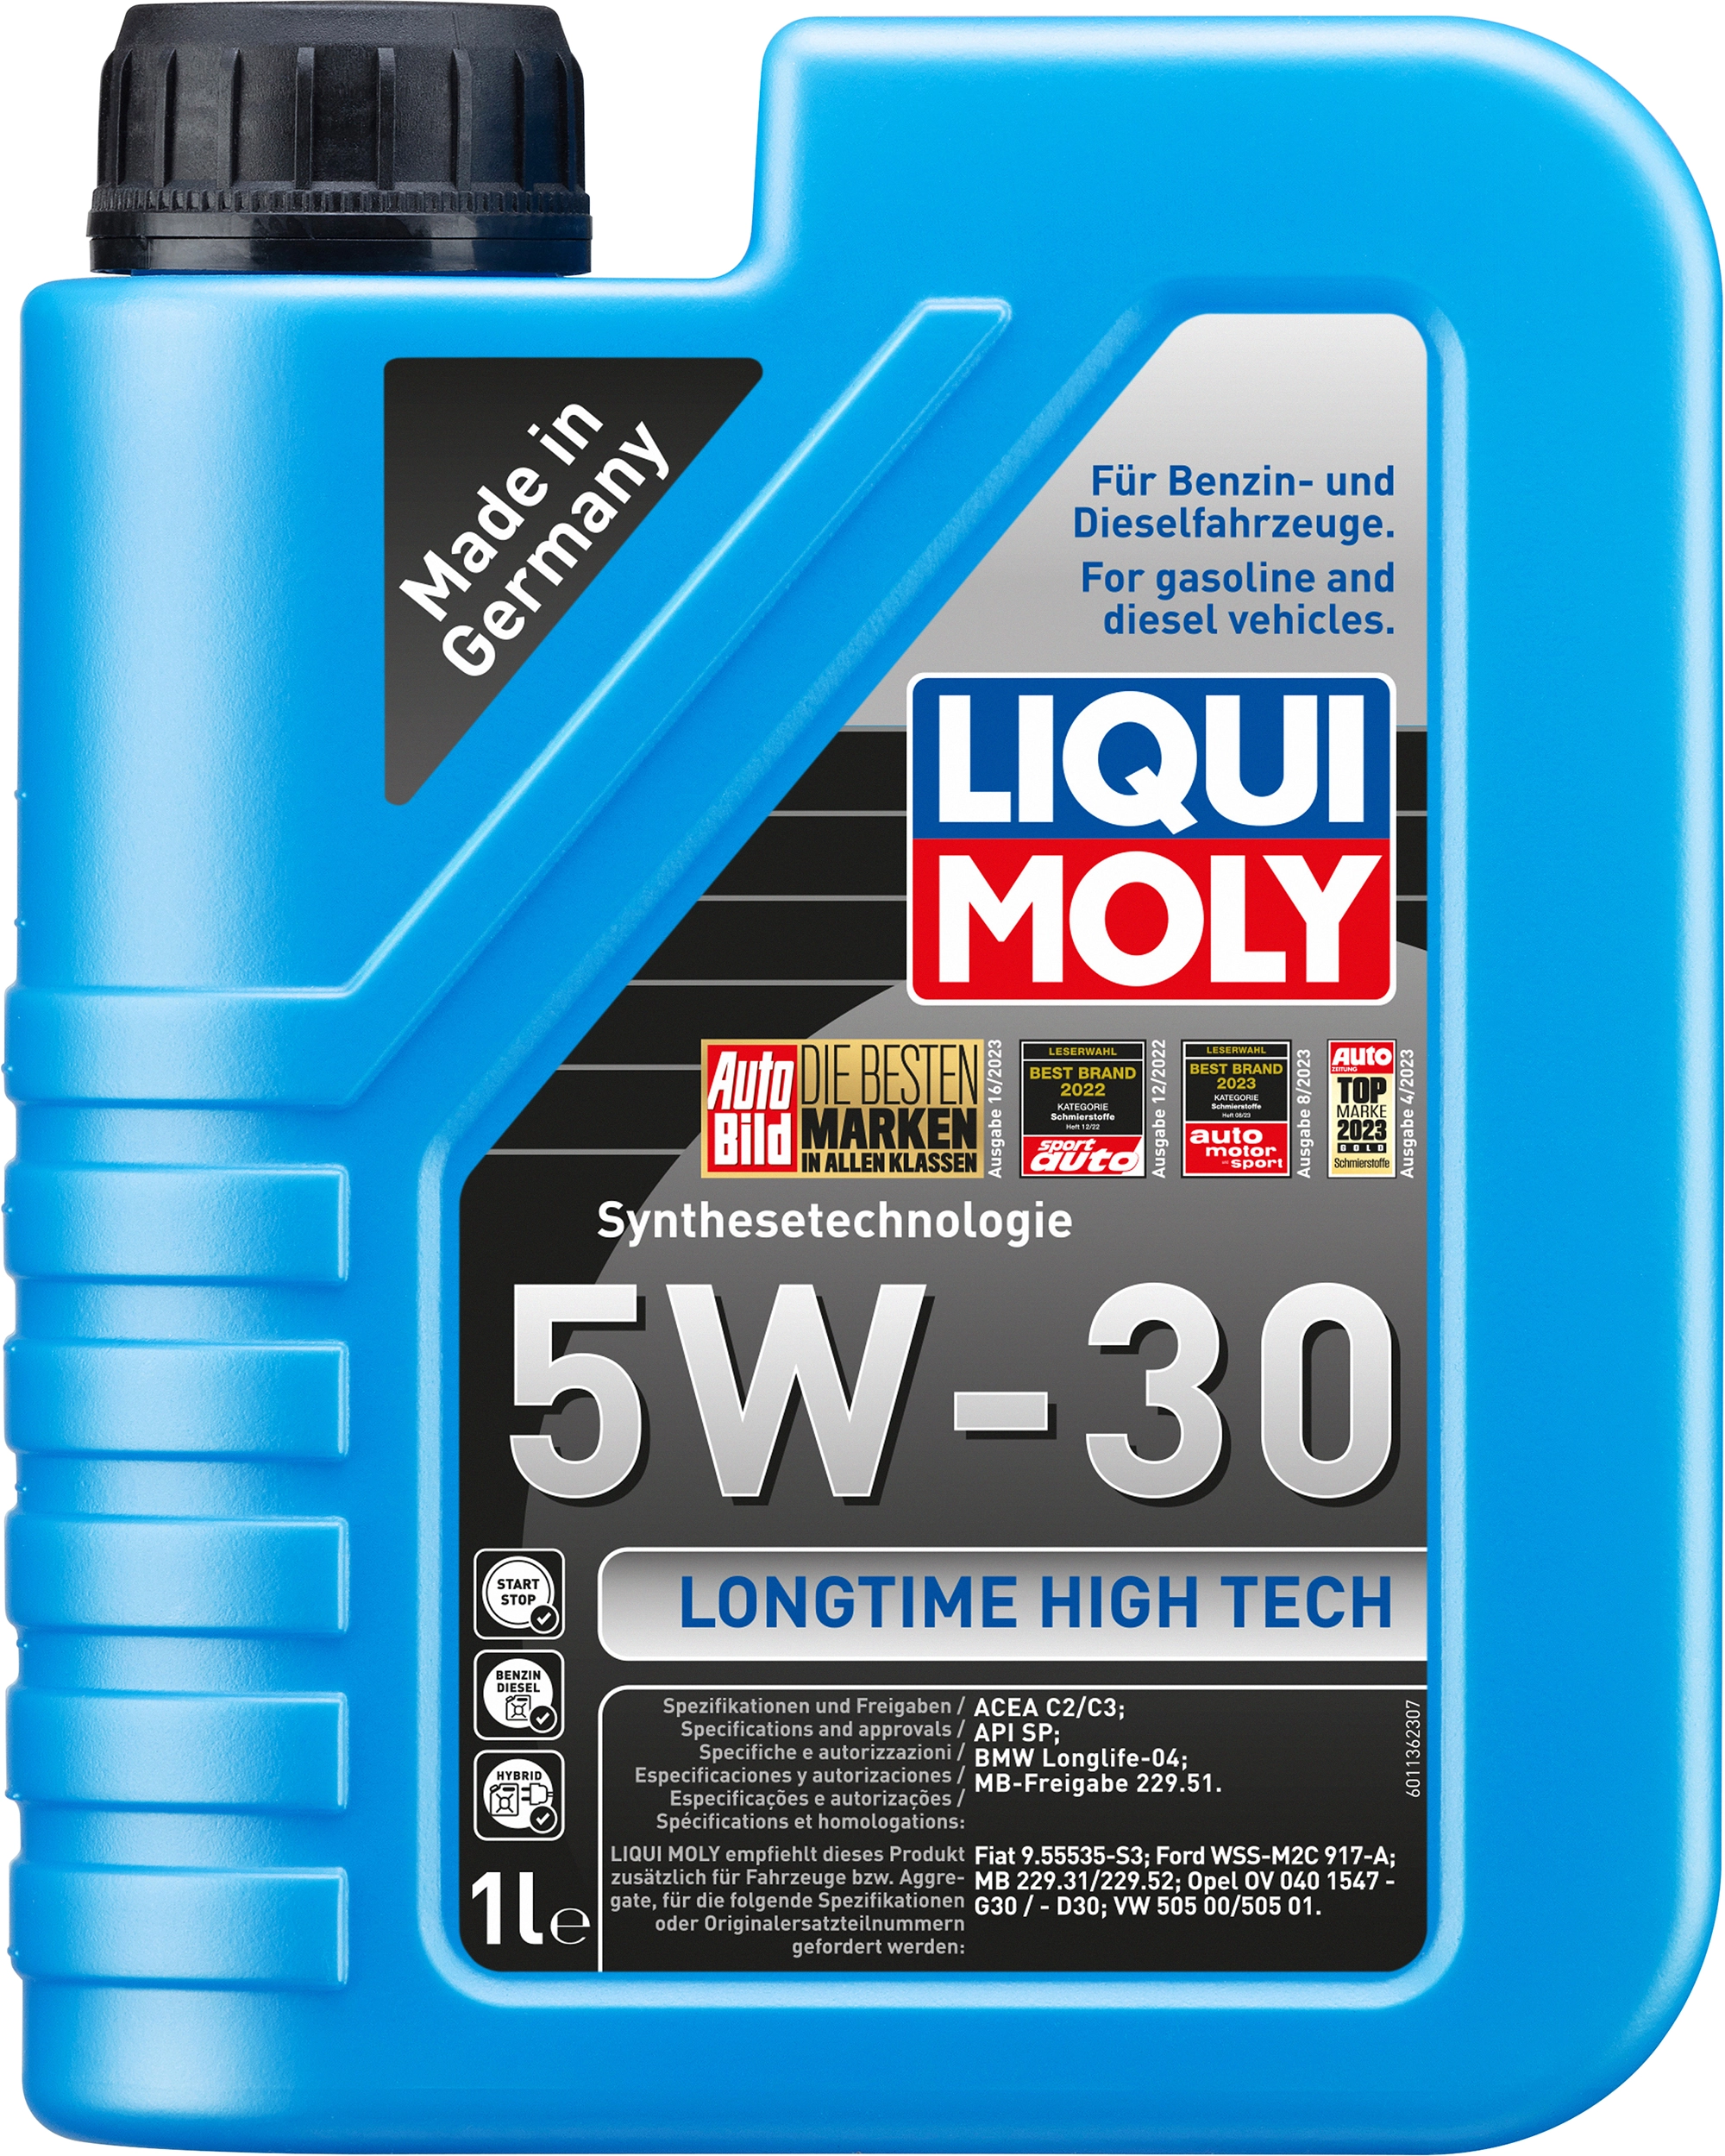 Liqui Moly Longtime High Tech 5W-30 1 l kaufen bei OBI